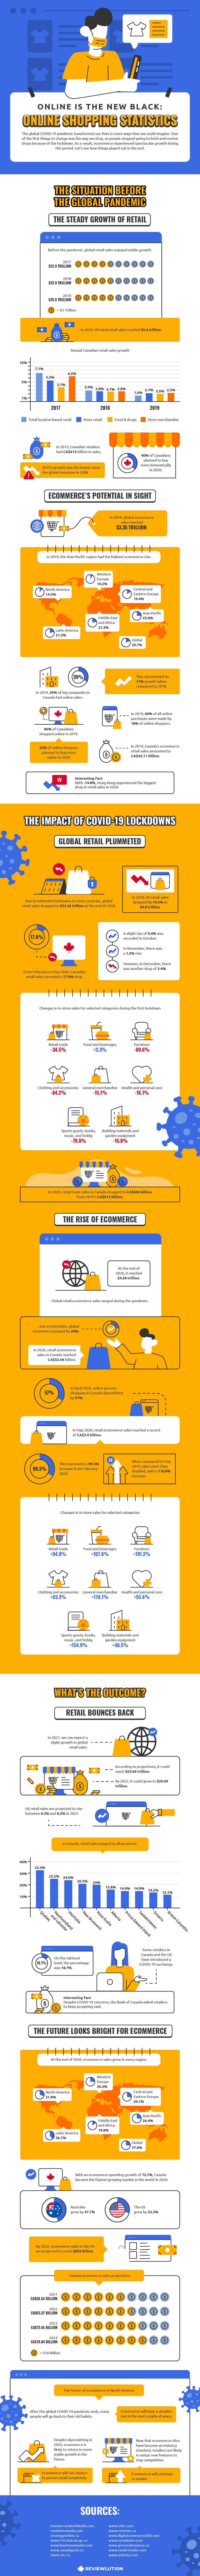 online shopping statistics 2021